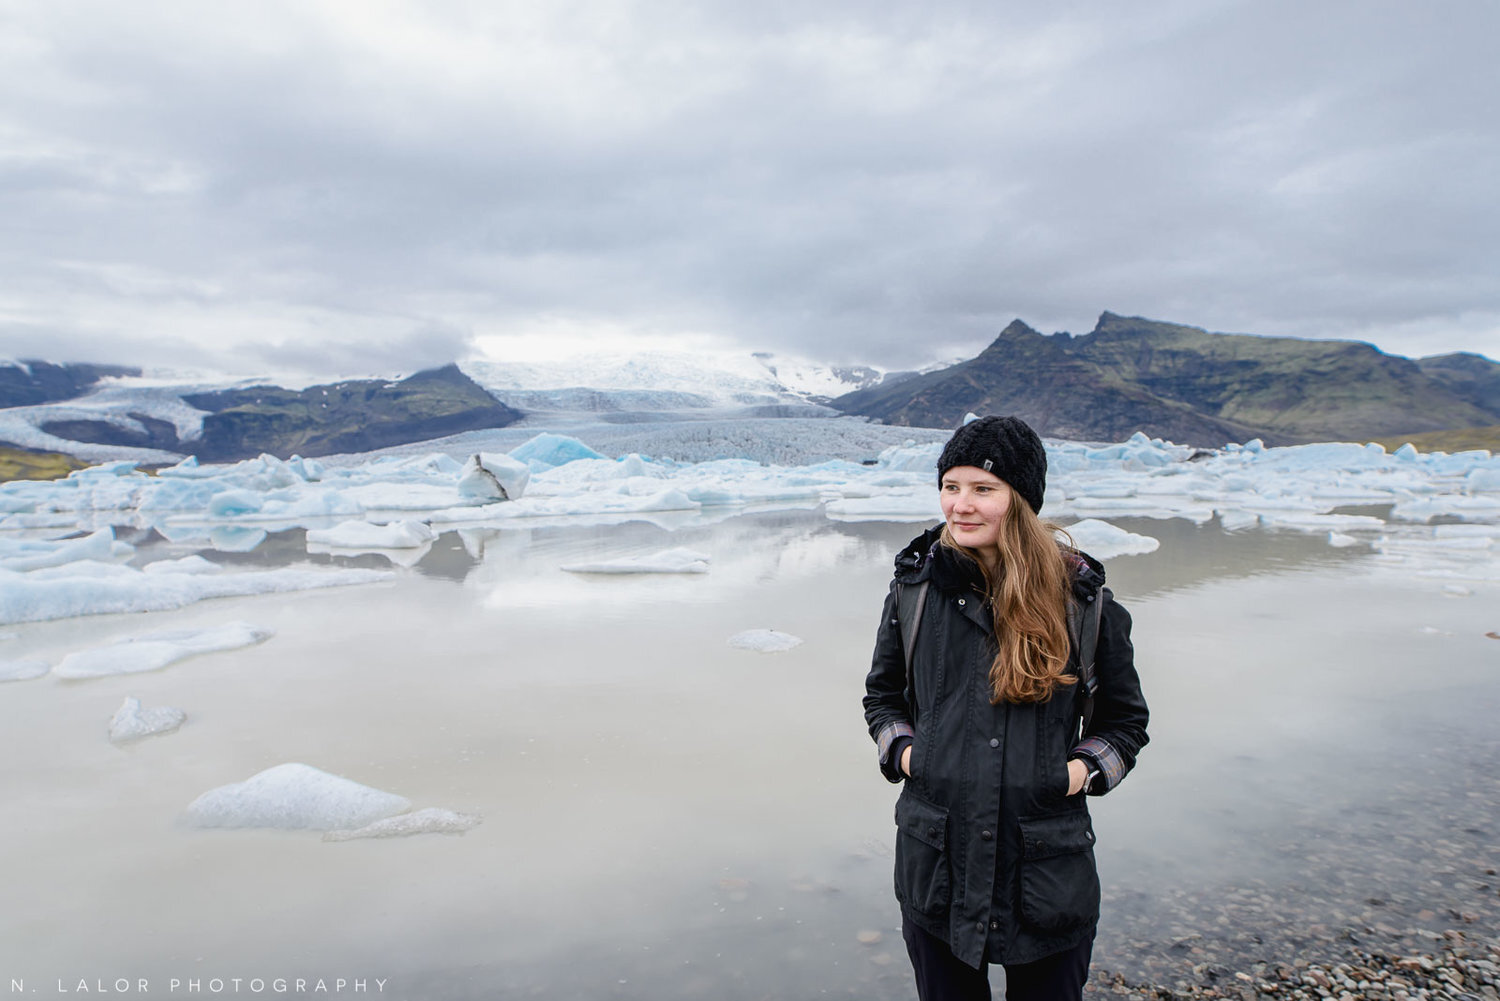 nlalor-photography-2018-July-Iceland-Trip-12.jpg